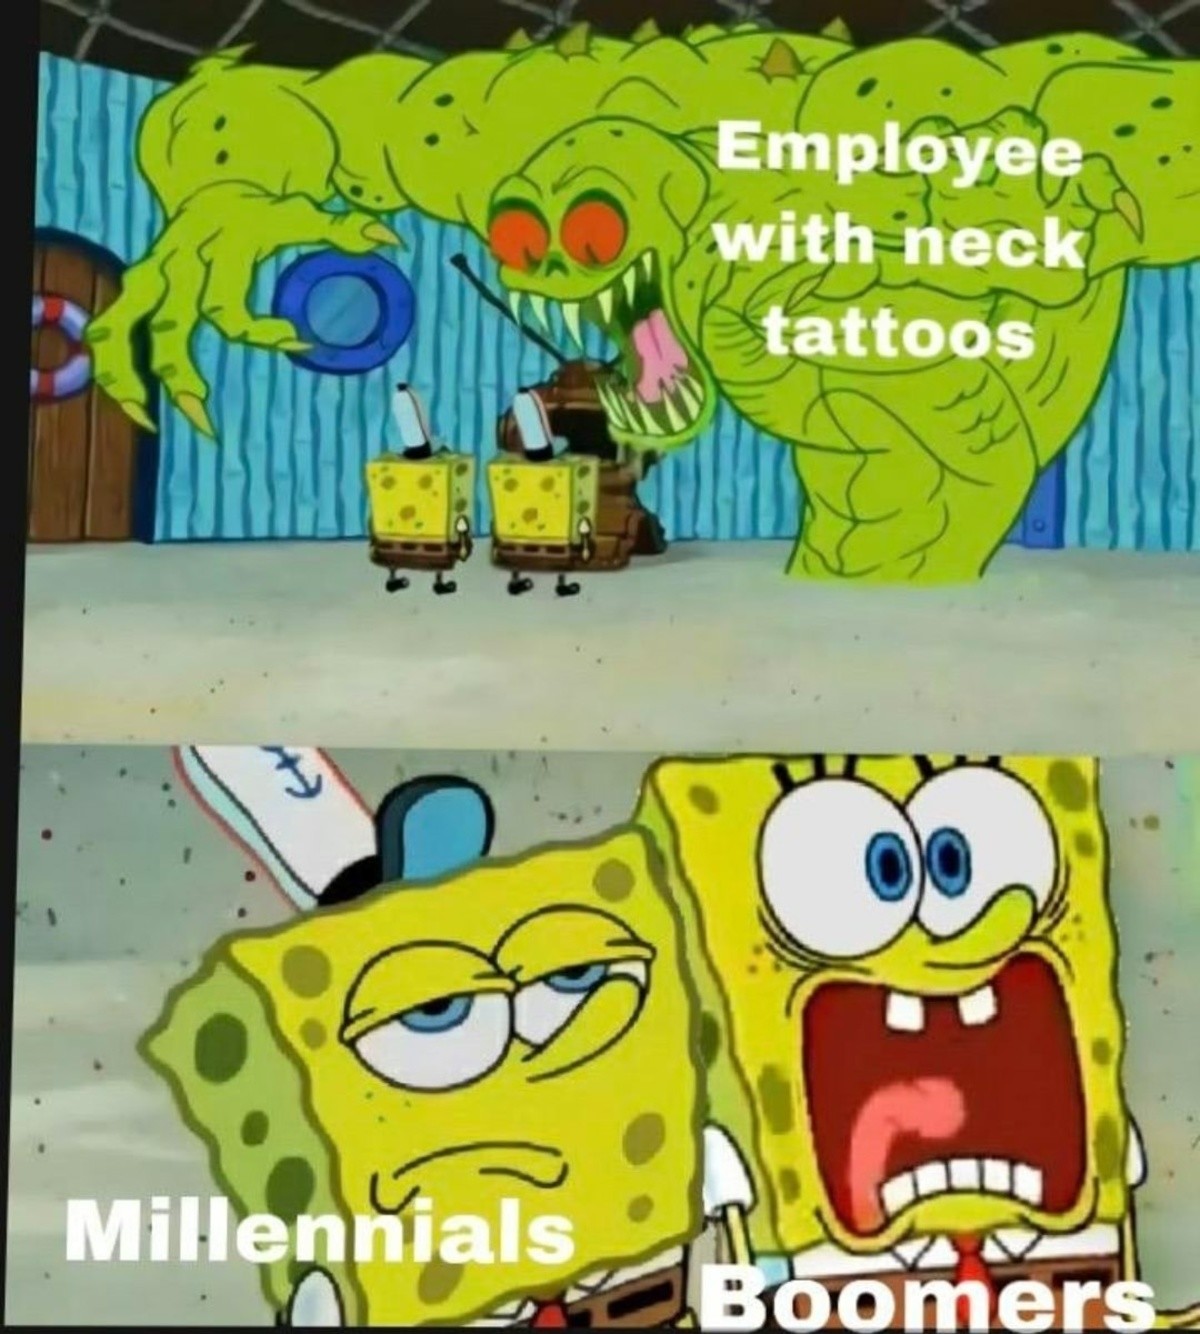 coronavirus meme spongebob - Employee with neck tattoos Millennials Boomers